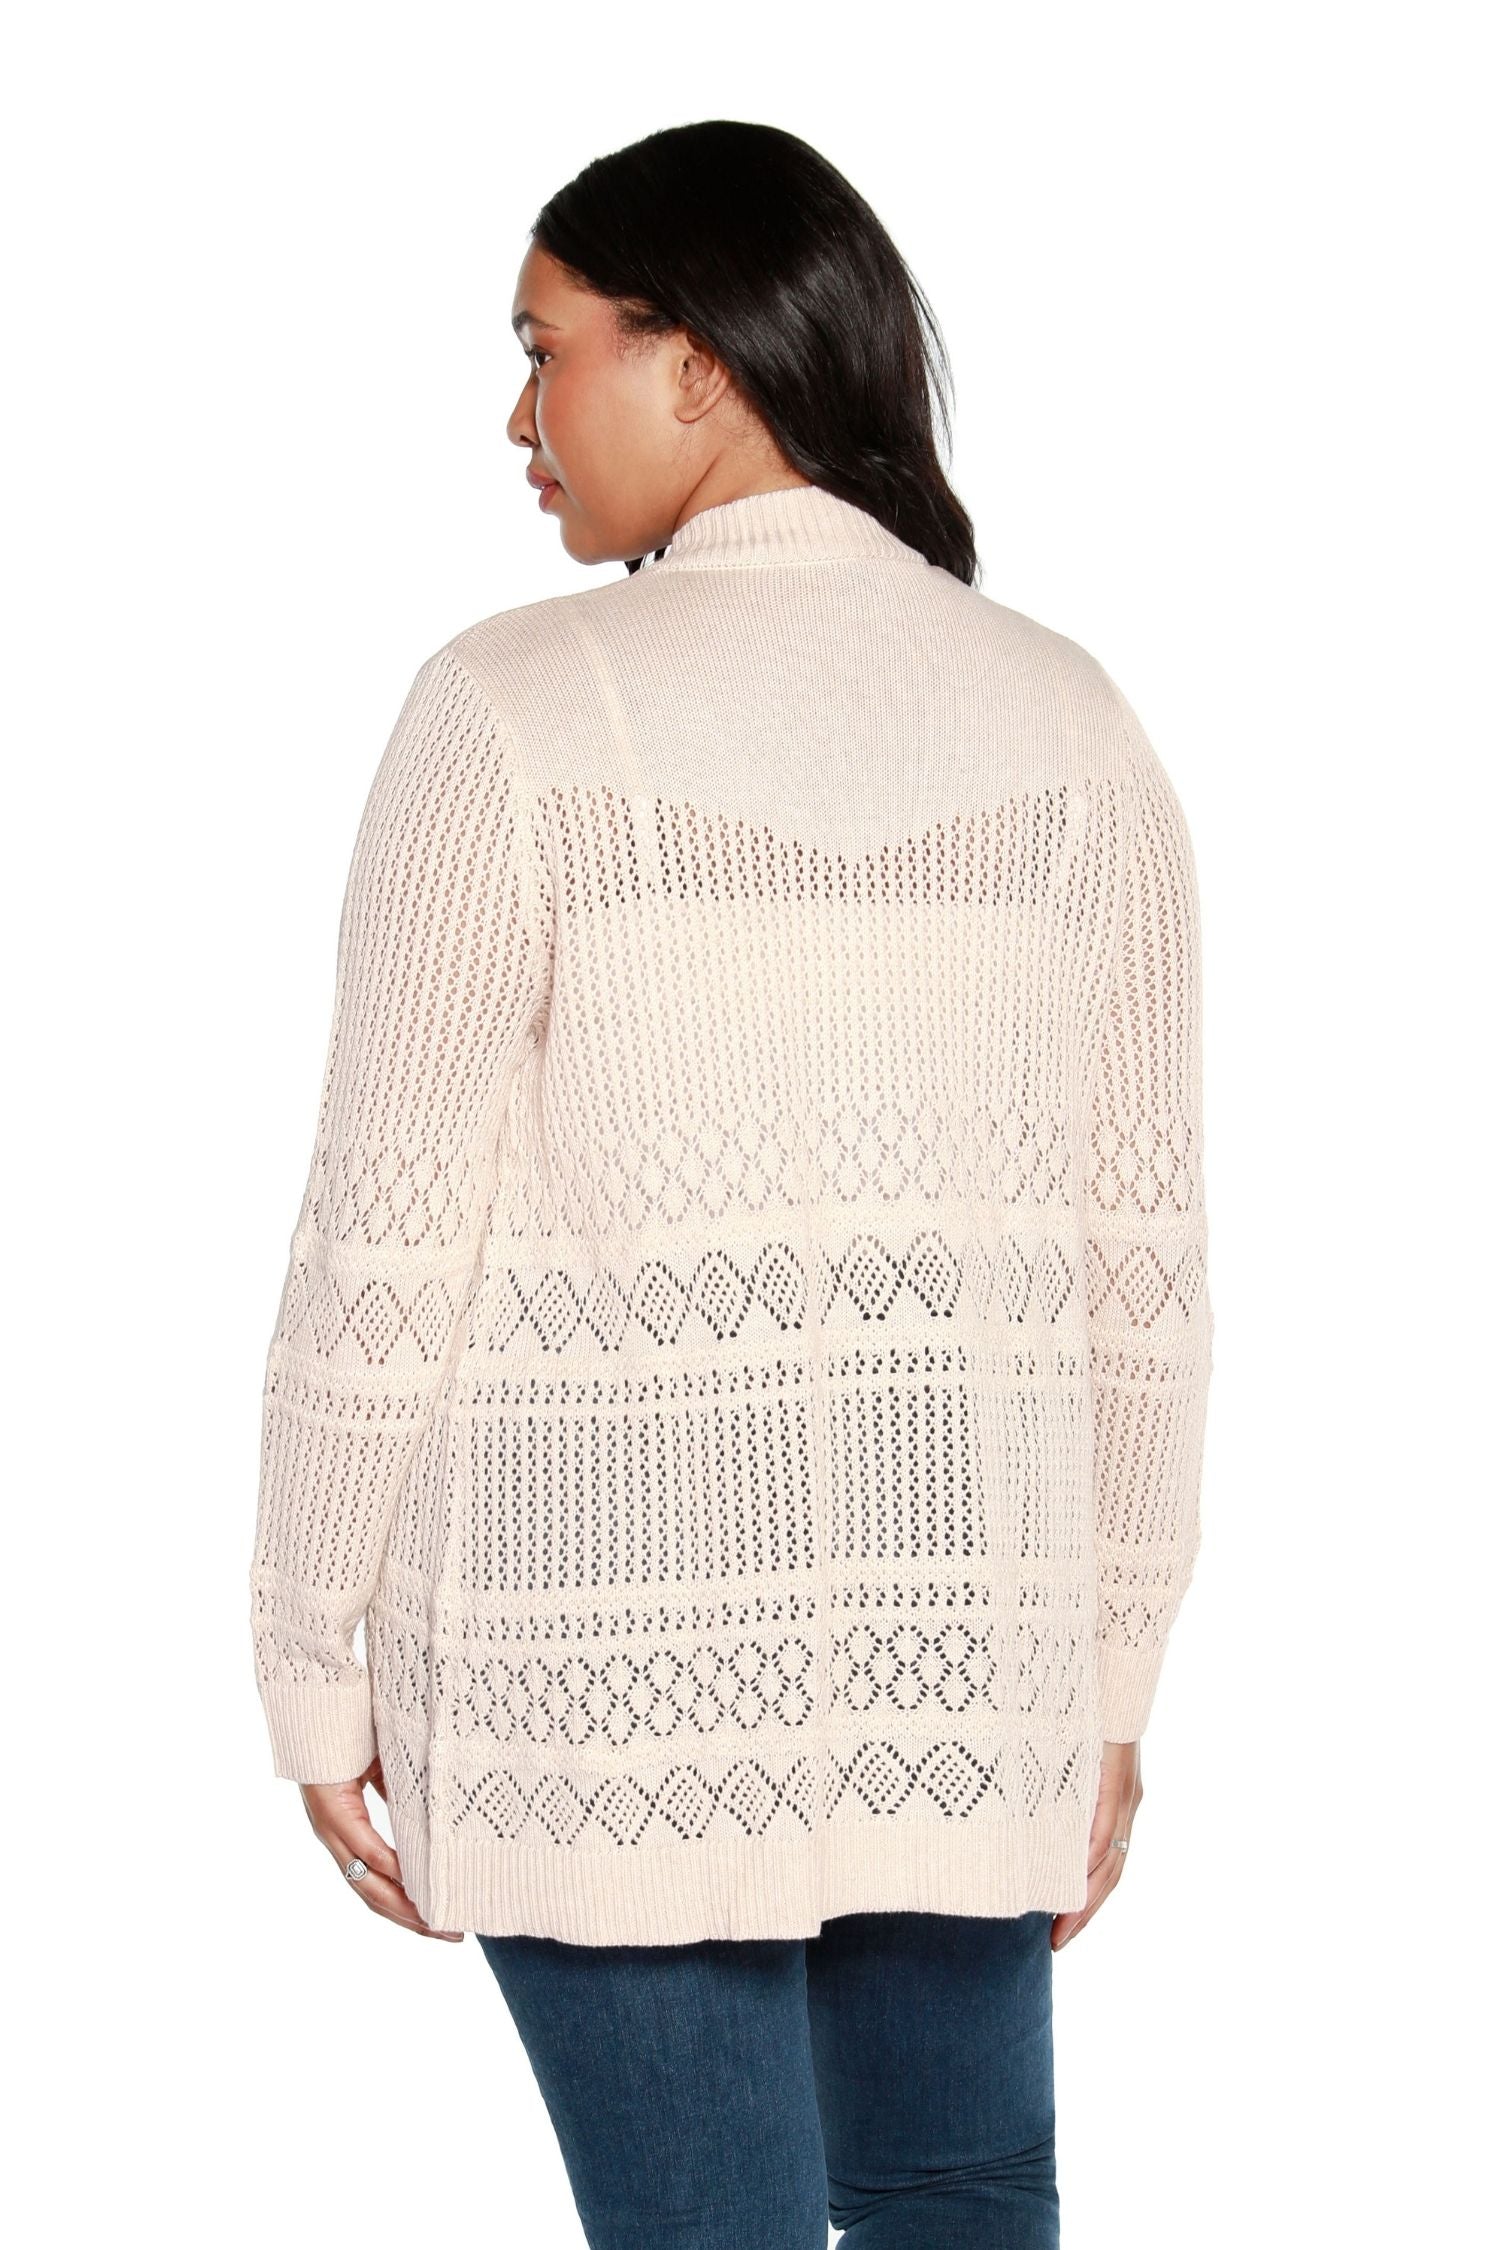 Women's Long Crochet Cardigan Mid-hip Open Sweater with Long Sleeves | Curvy